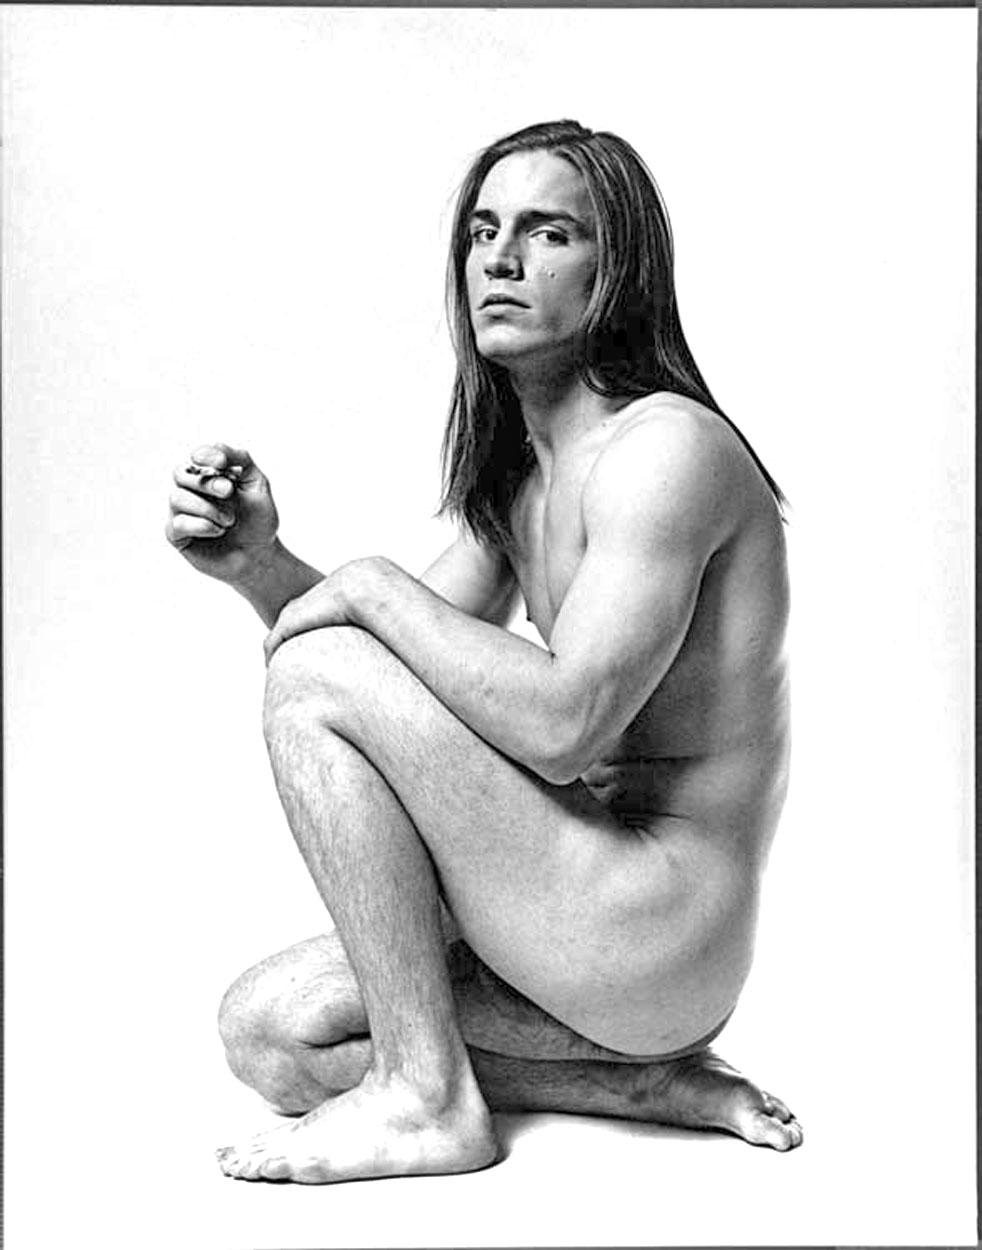 Warhol Superstar Joe Dallesandro star of "Trash", nude for 'After Dark' magazine